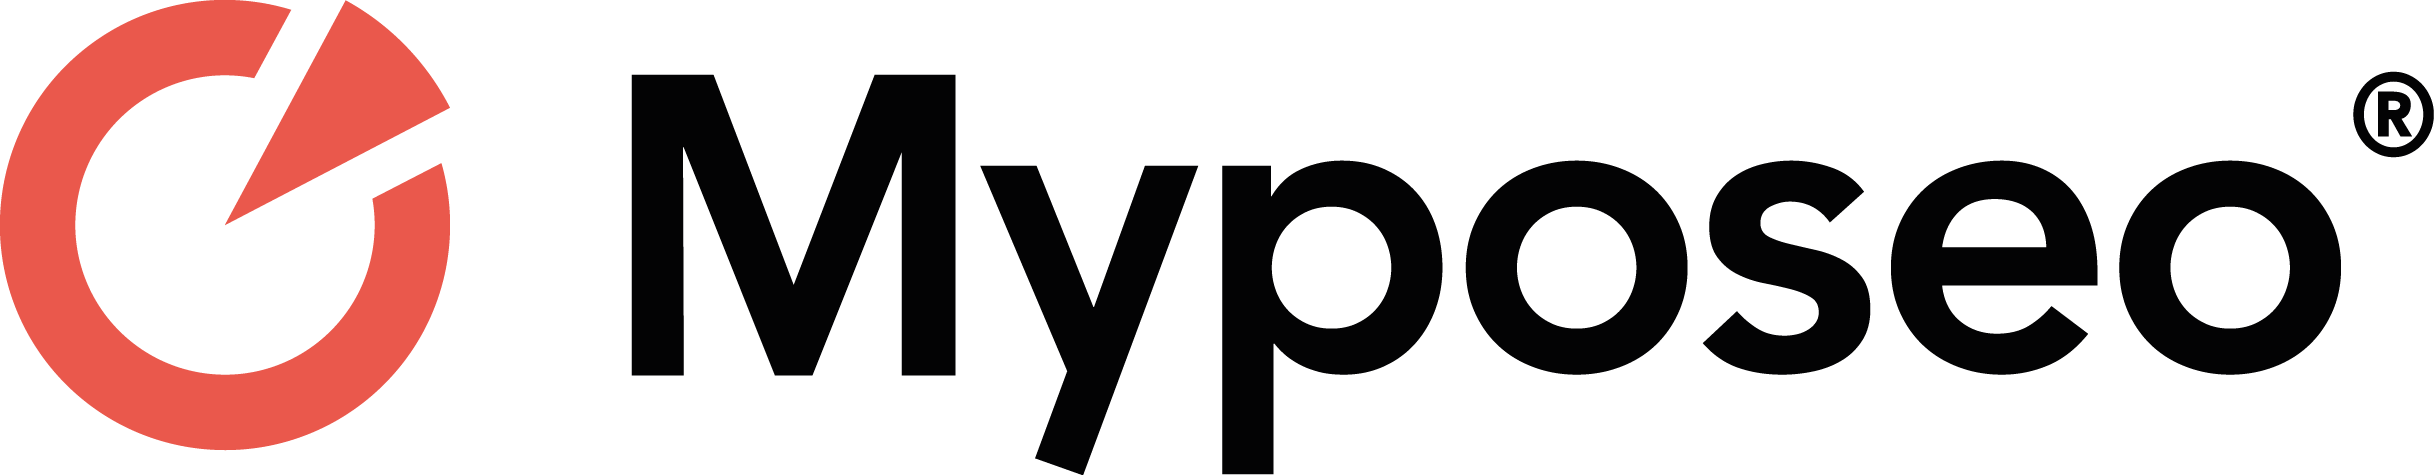 nouveau-logo-myposeo-2017